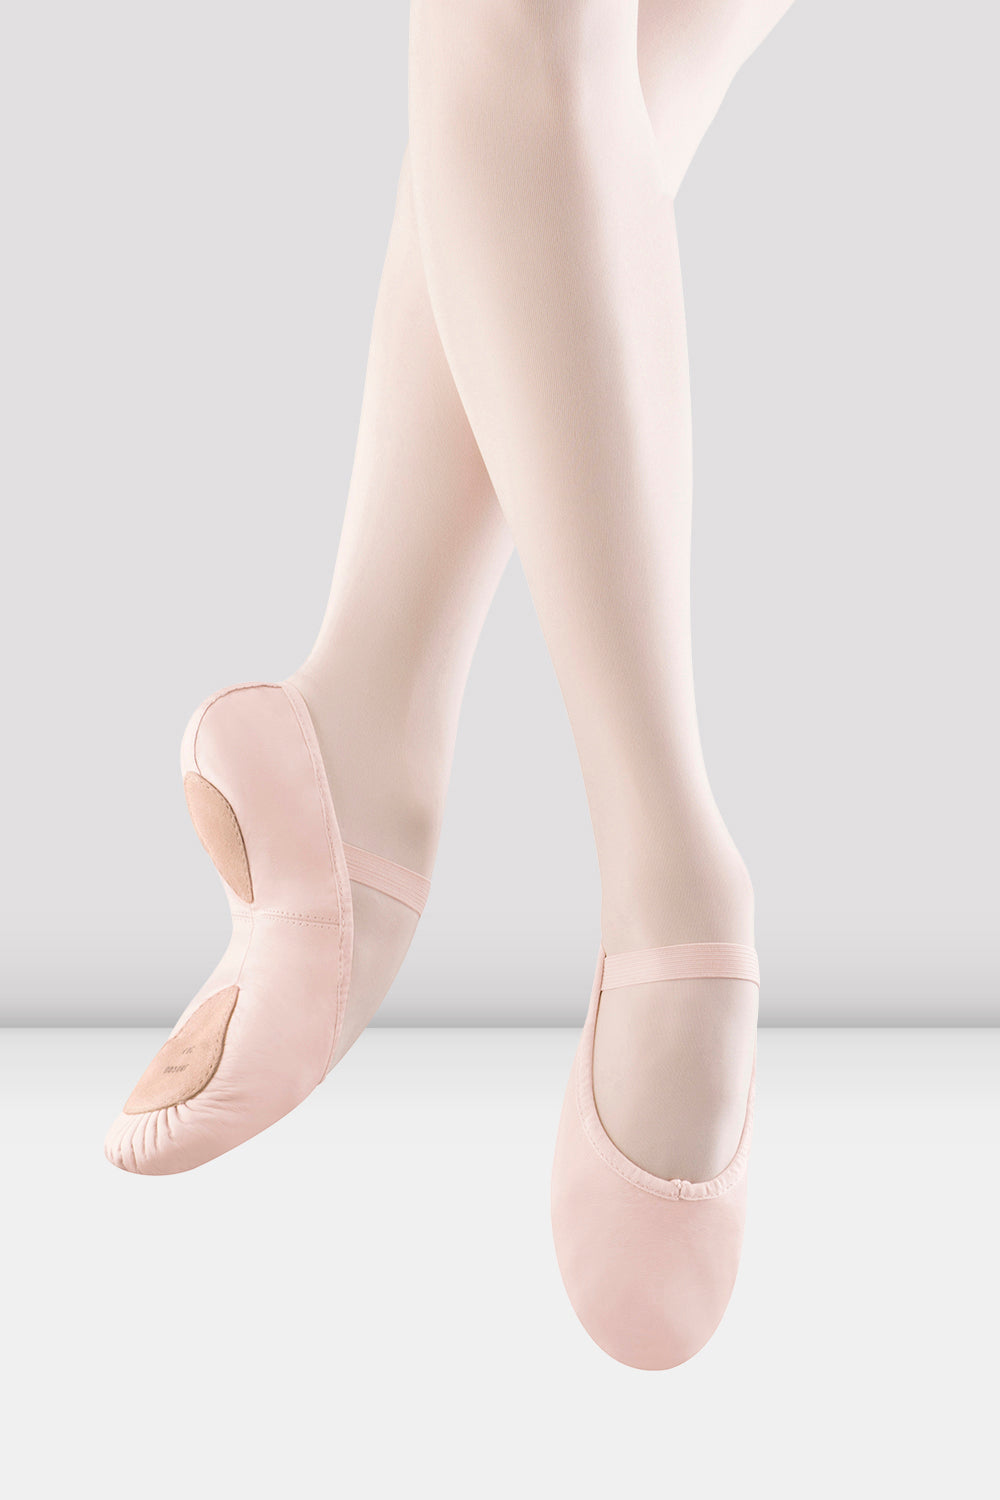 BLOCH Childrens Dansoft ll Split Sole Ballet Shoes, Pink Leather